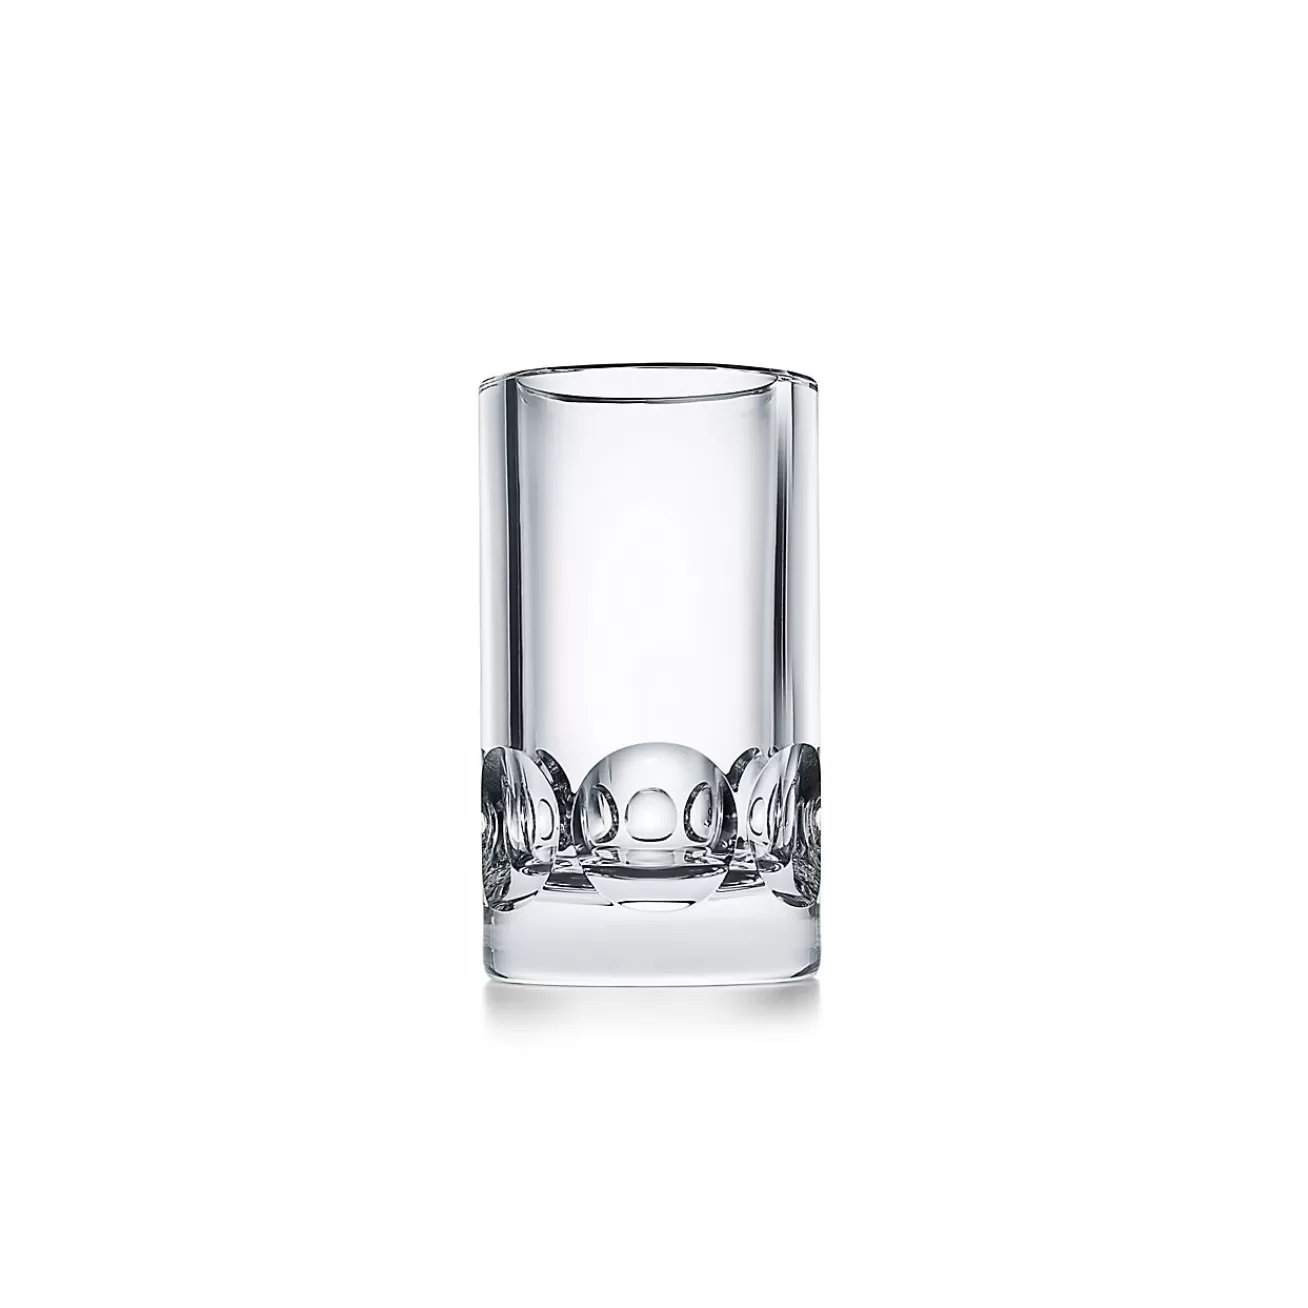 Tiffany & Co. Tiffany Pearl Cut vase in mouth-blown crystal glass, 12" high. | ^ Decor